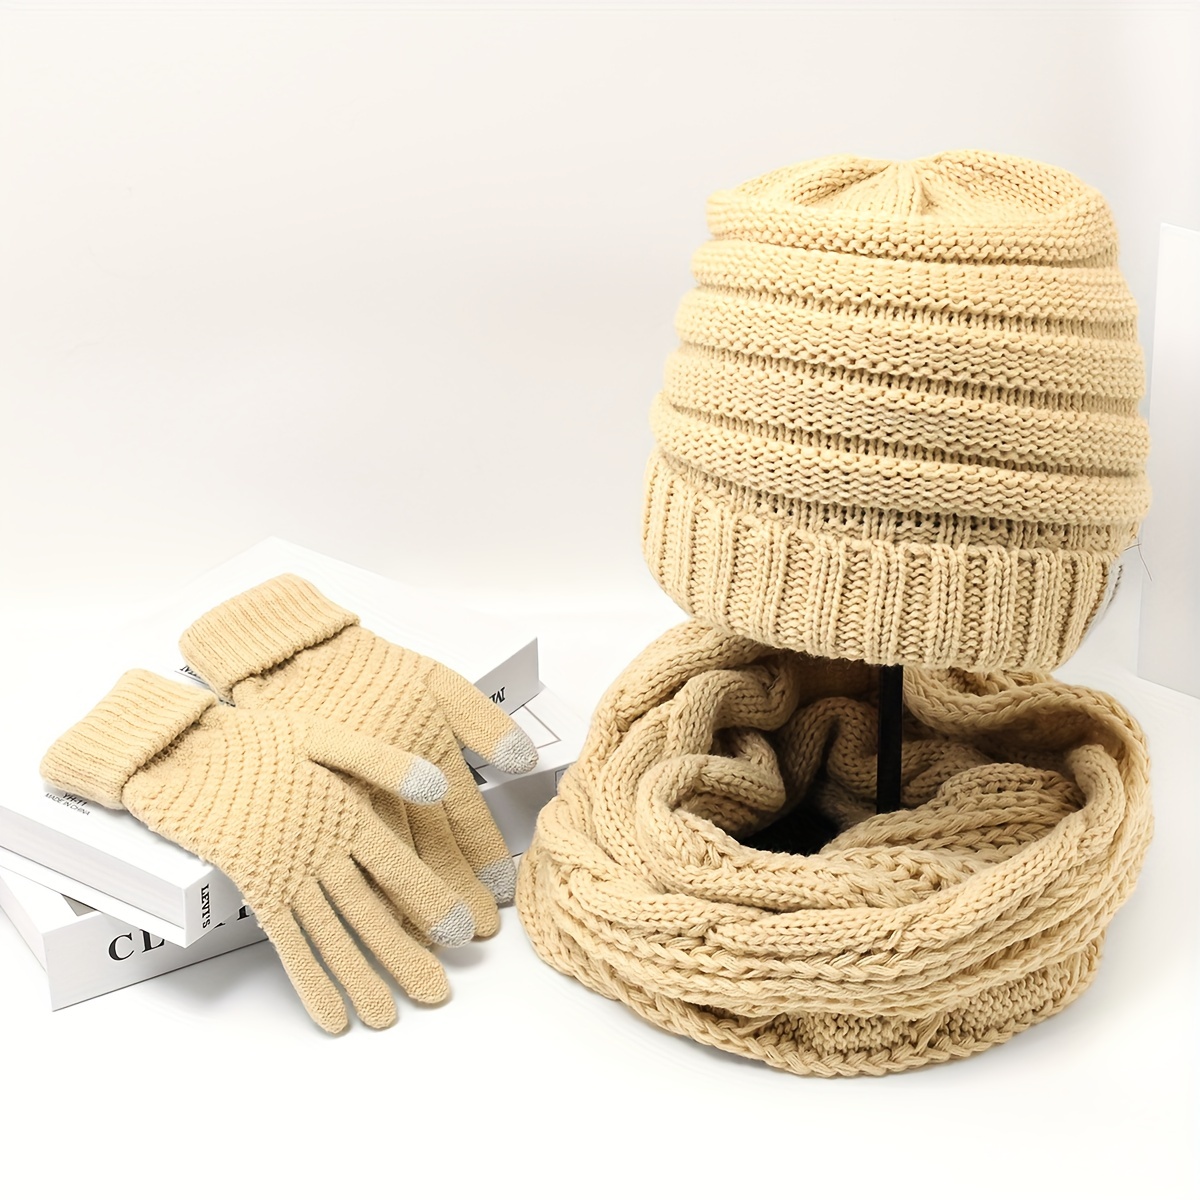 Designer Hats and Gloves For Women